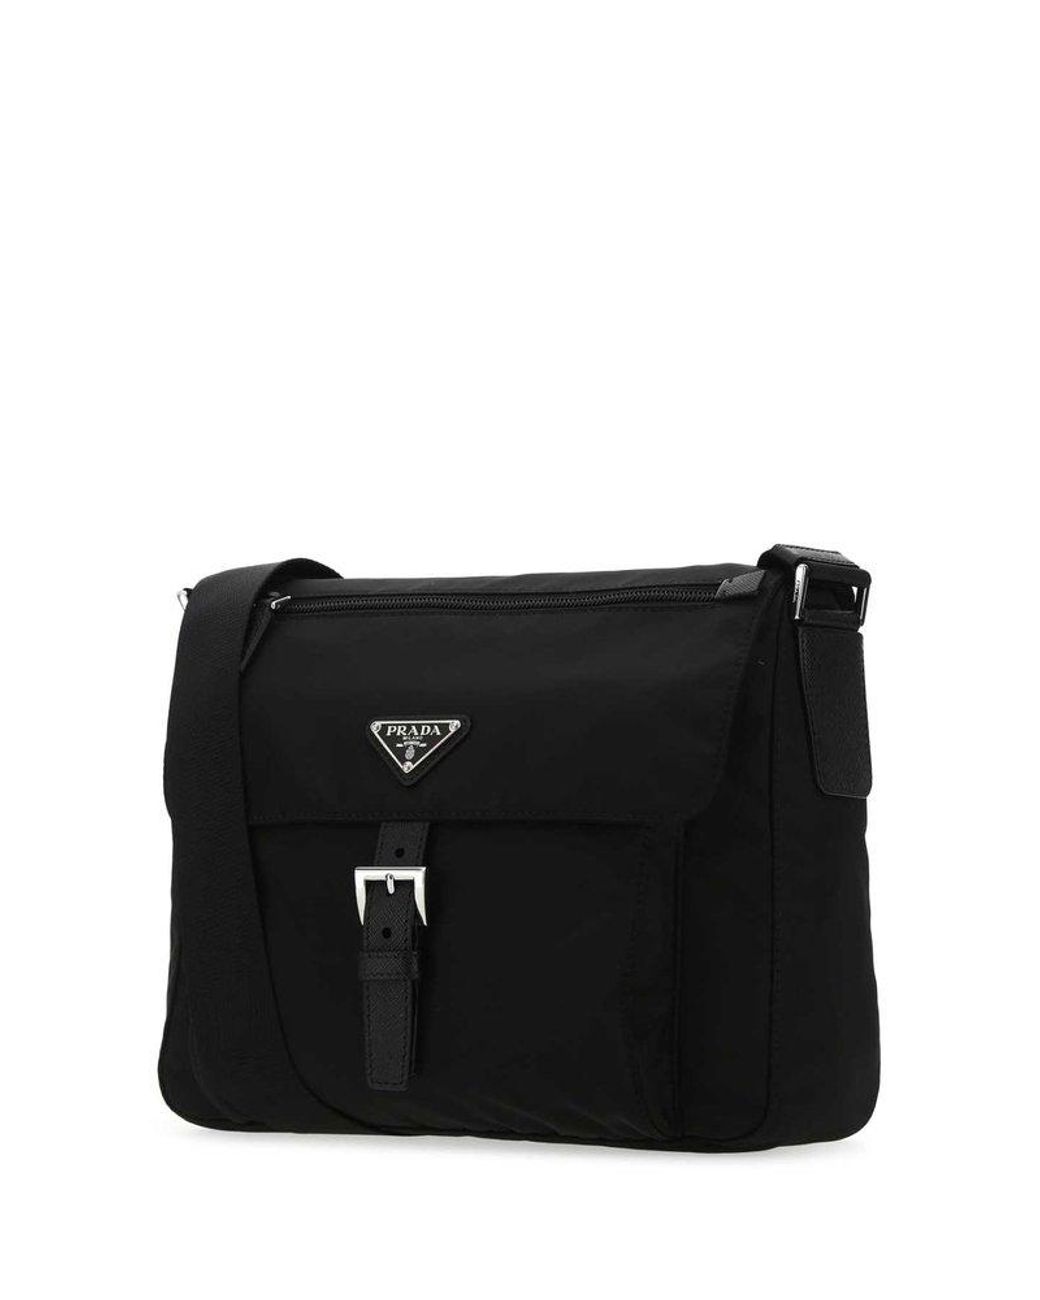 Prada Re-nylon Crossbody Bag in Black | Lyst